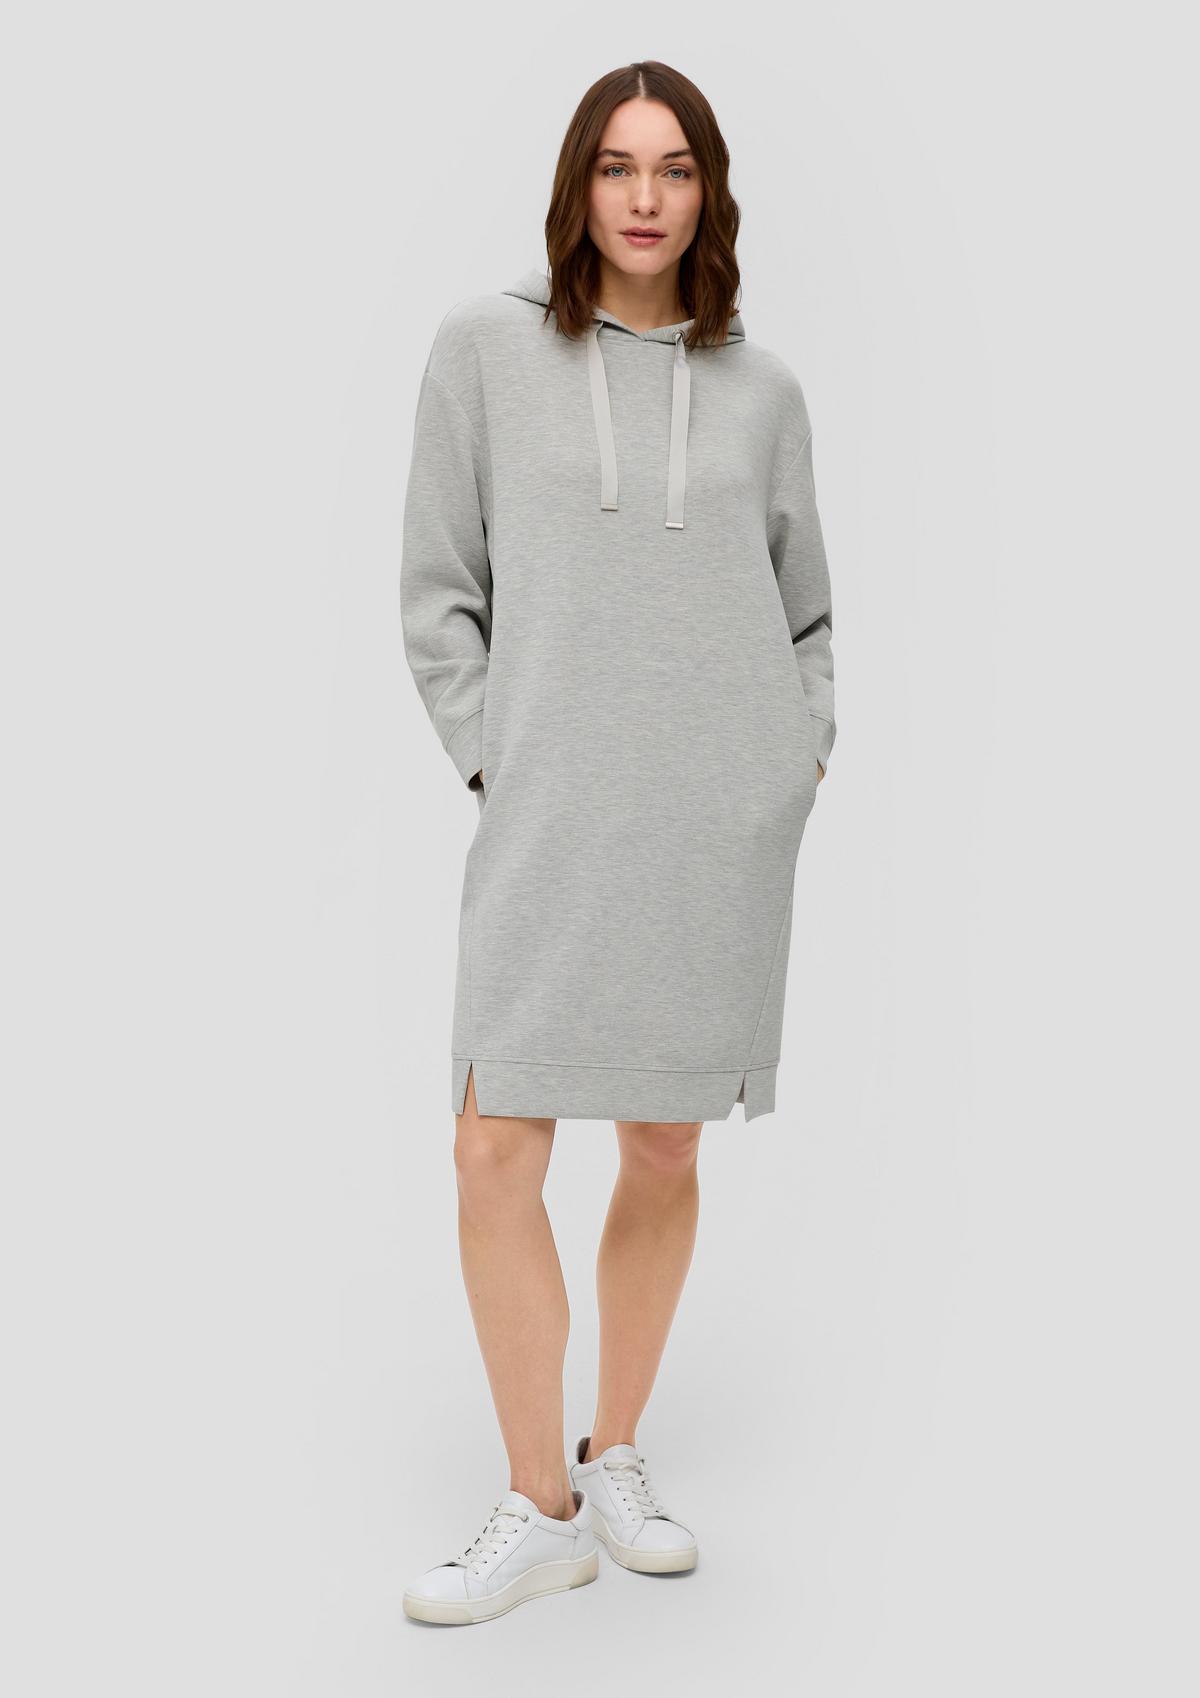 s.Oliver Sweatshirt dress made of a modal blend